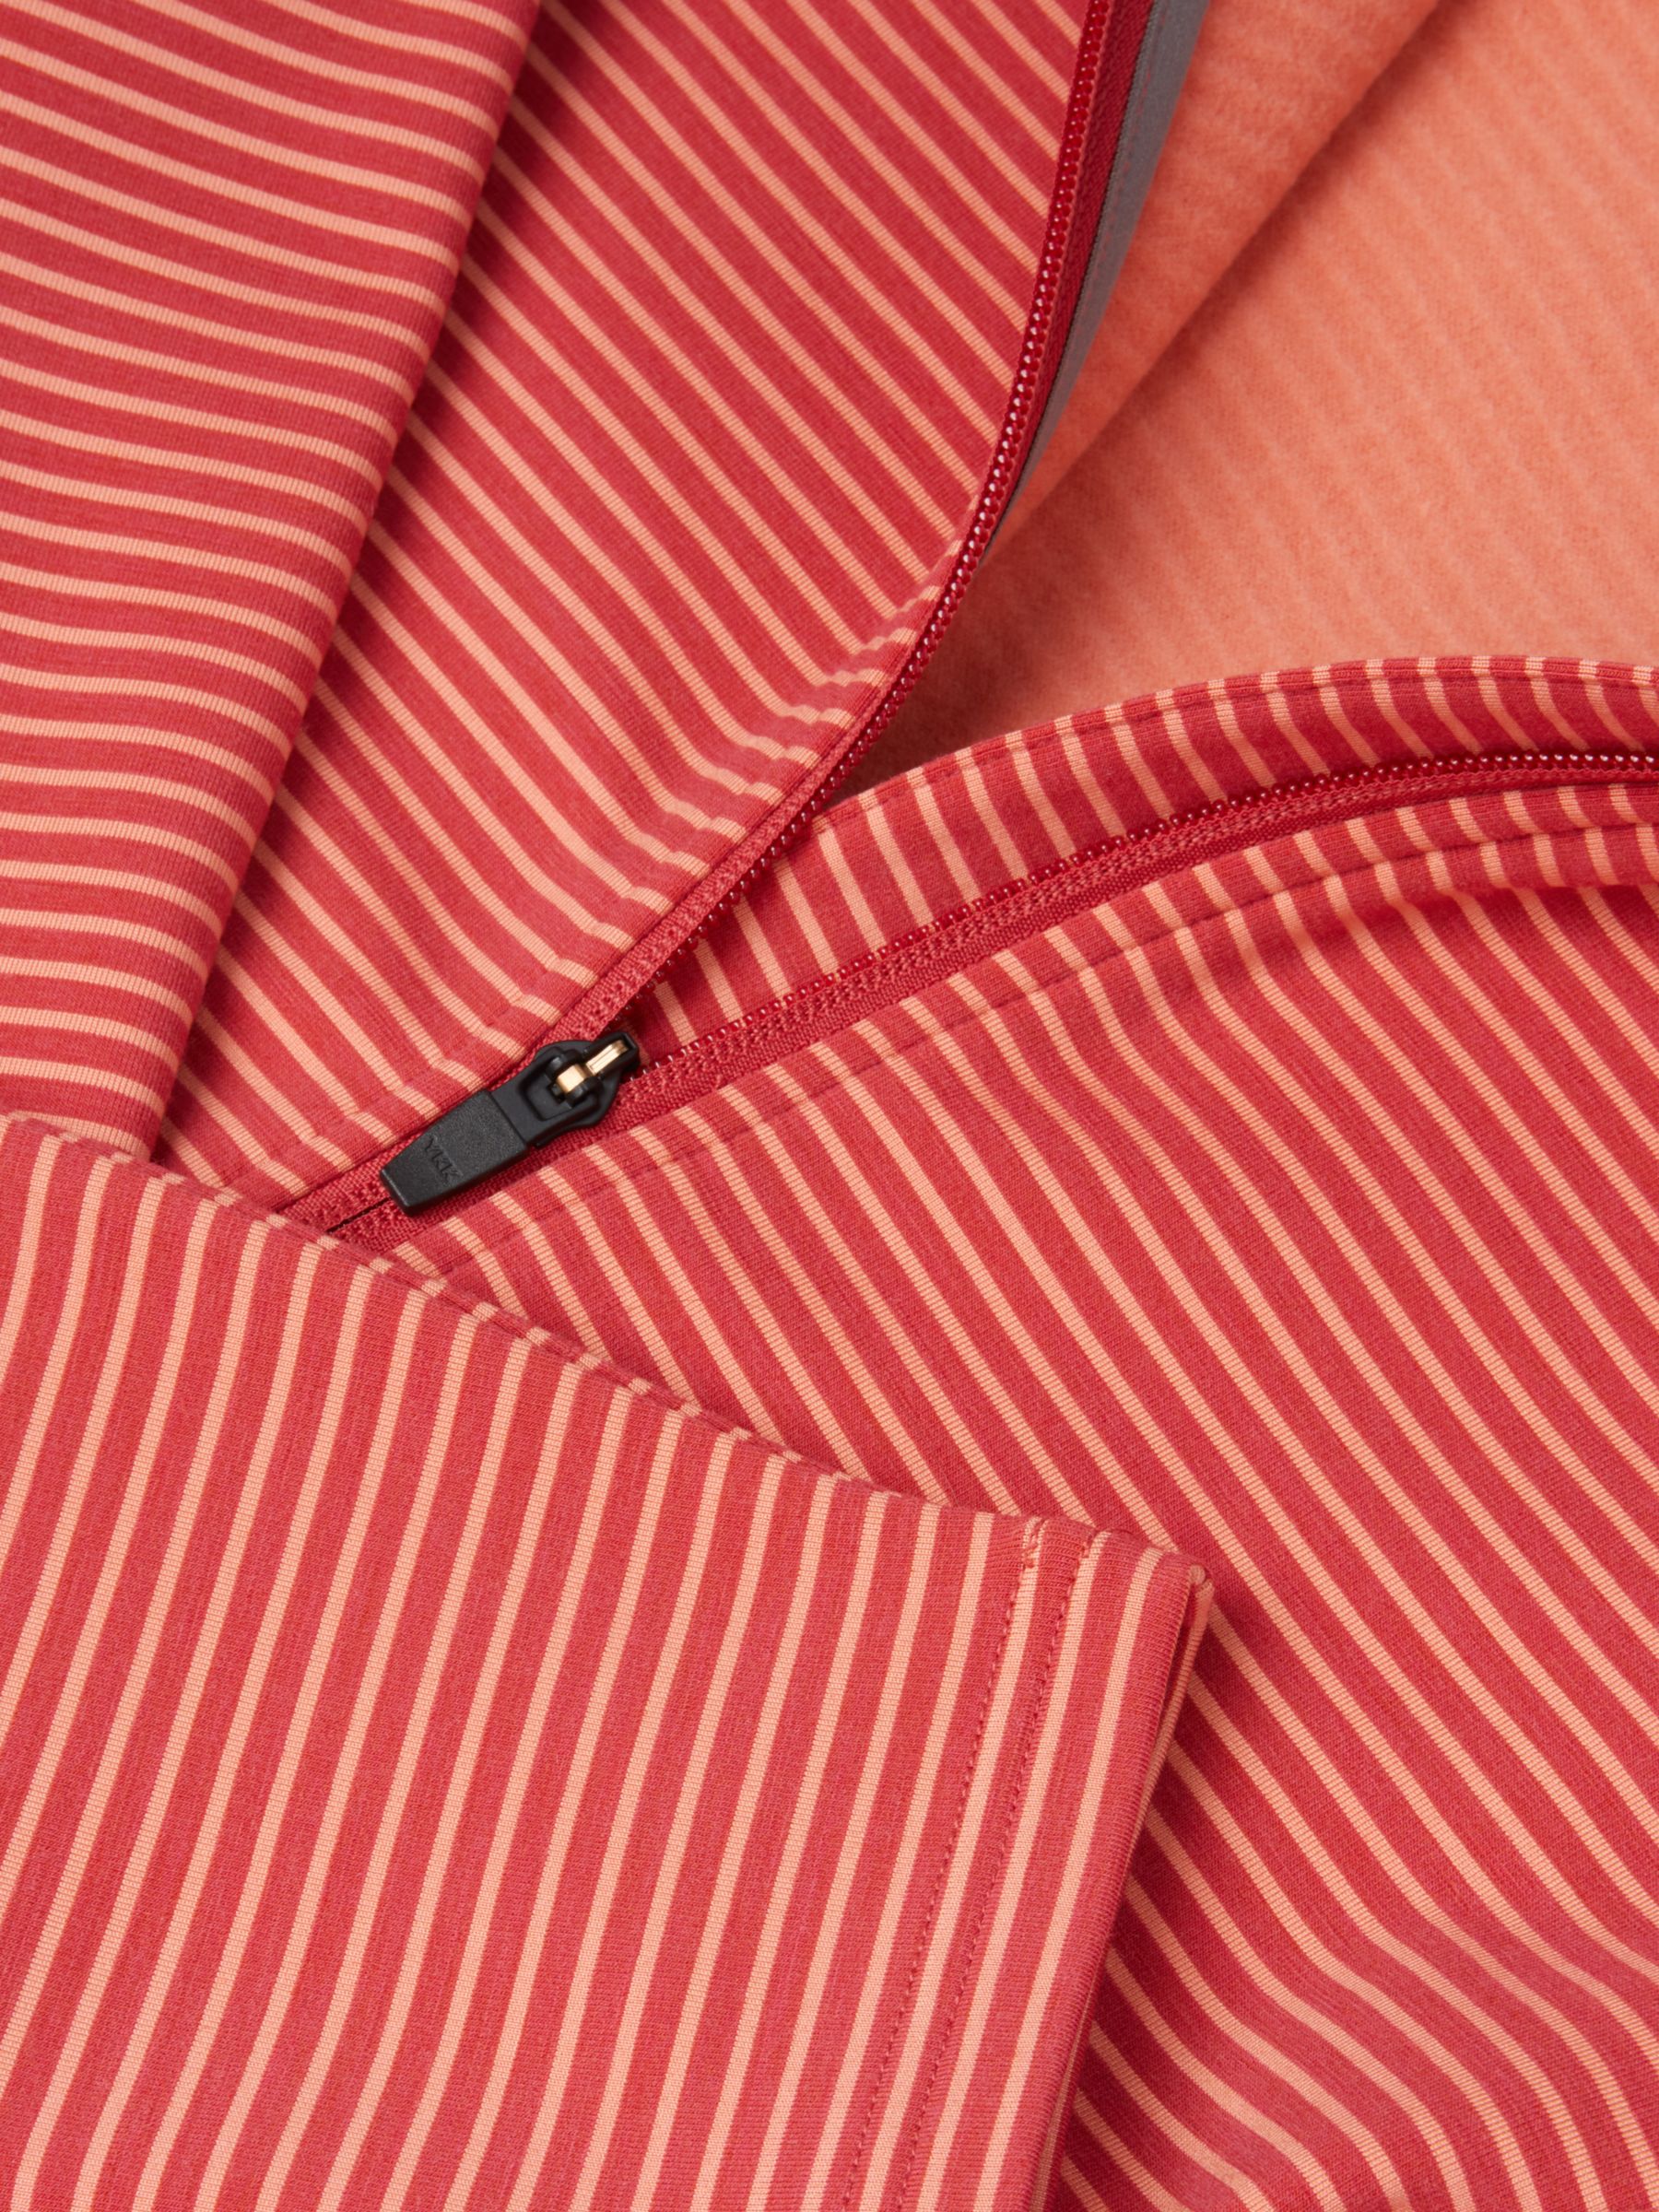 Buy Rohan Radiant Stripe Merino Fleece Jacket Online at johnlewis.com